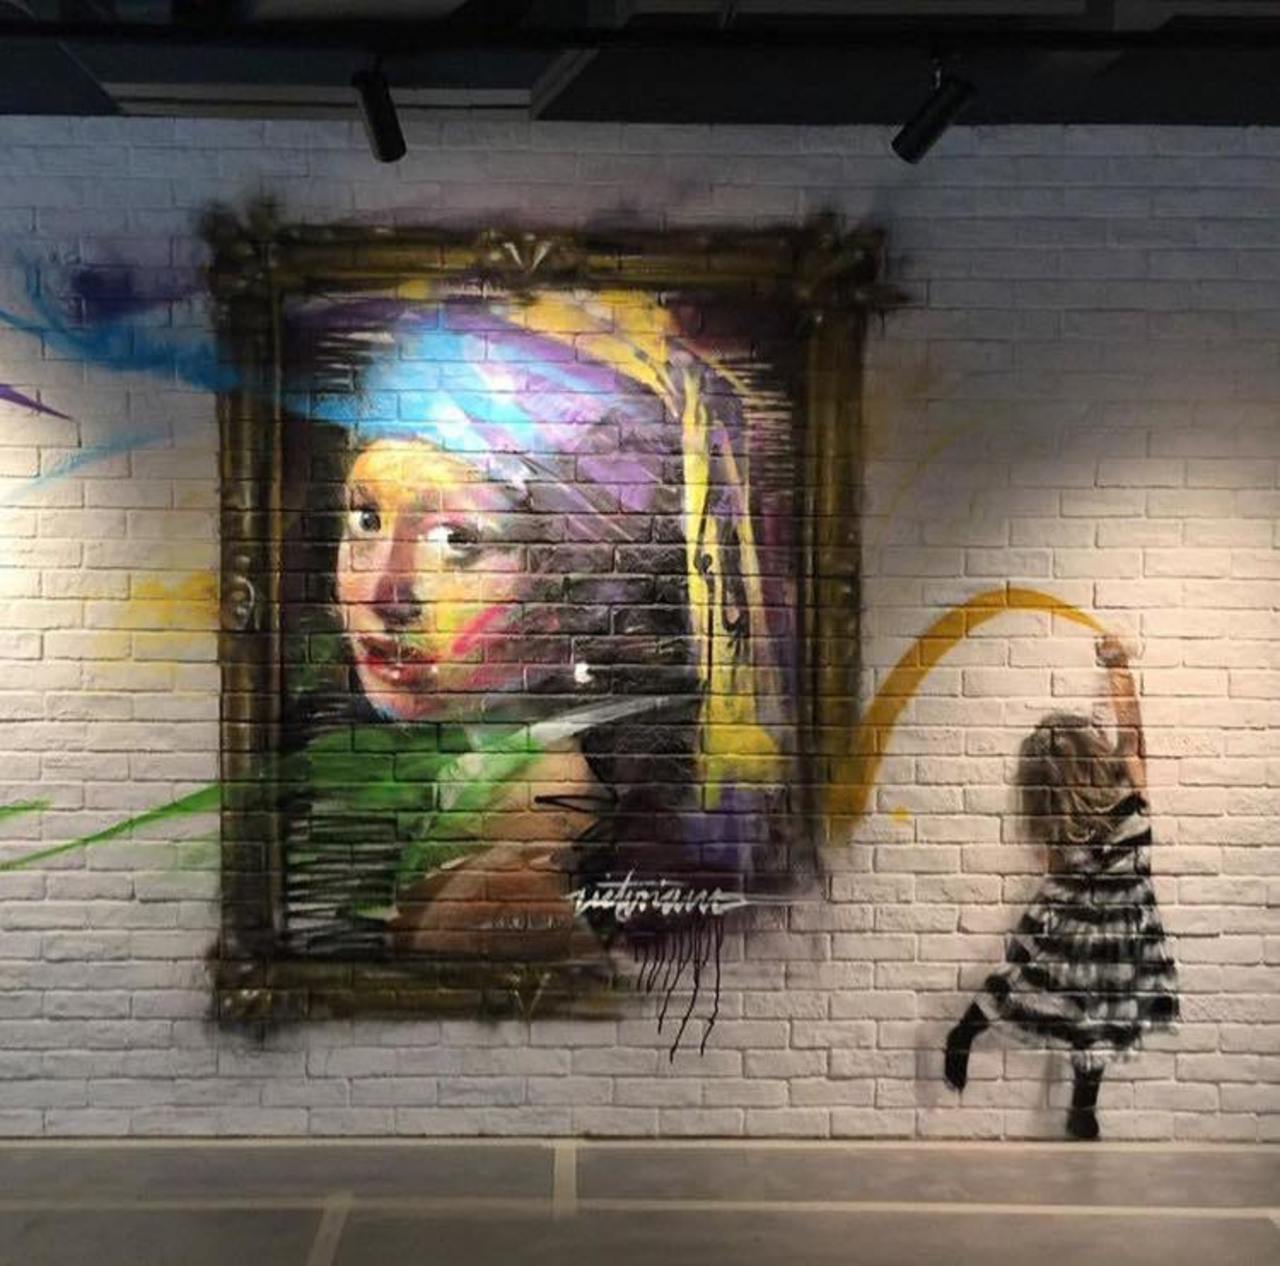 "Girl with a Pearl Earring", Baby Dreams - #Creative #StreetArt#art #VanDyck #beauty #joy http://beartistbeart.com/2016/12/22/girl-with-a-pearl-earring-baby-dreams-creative-streetart https://t.co/TWcAiODBrF